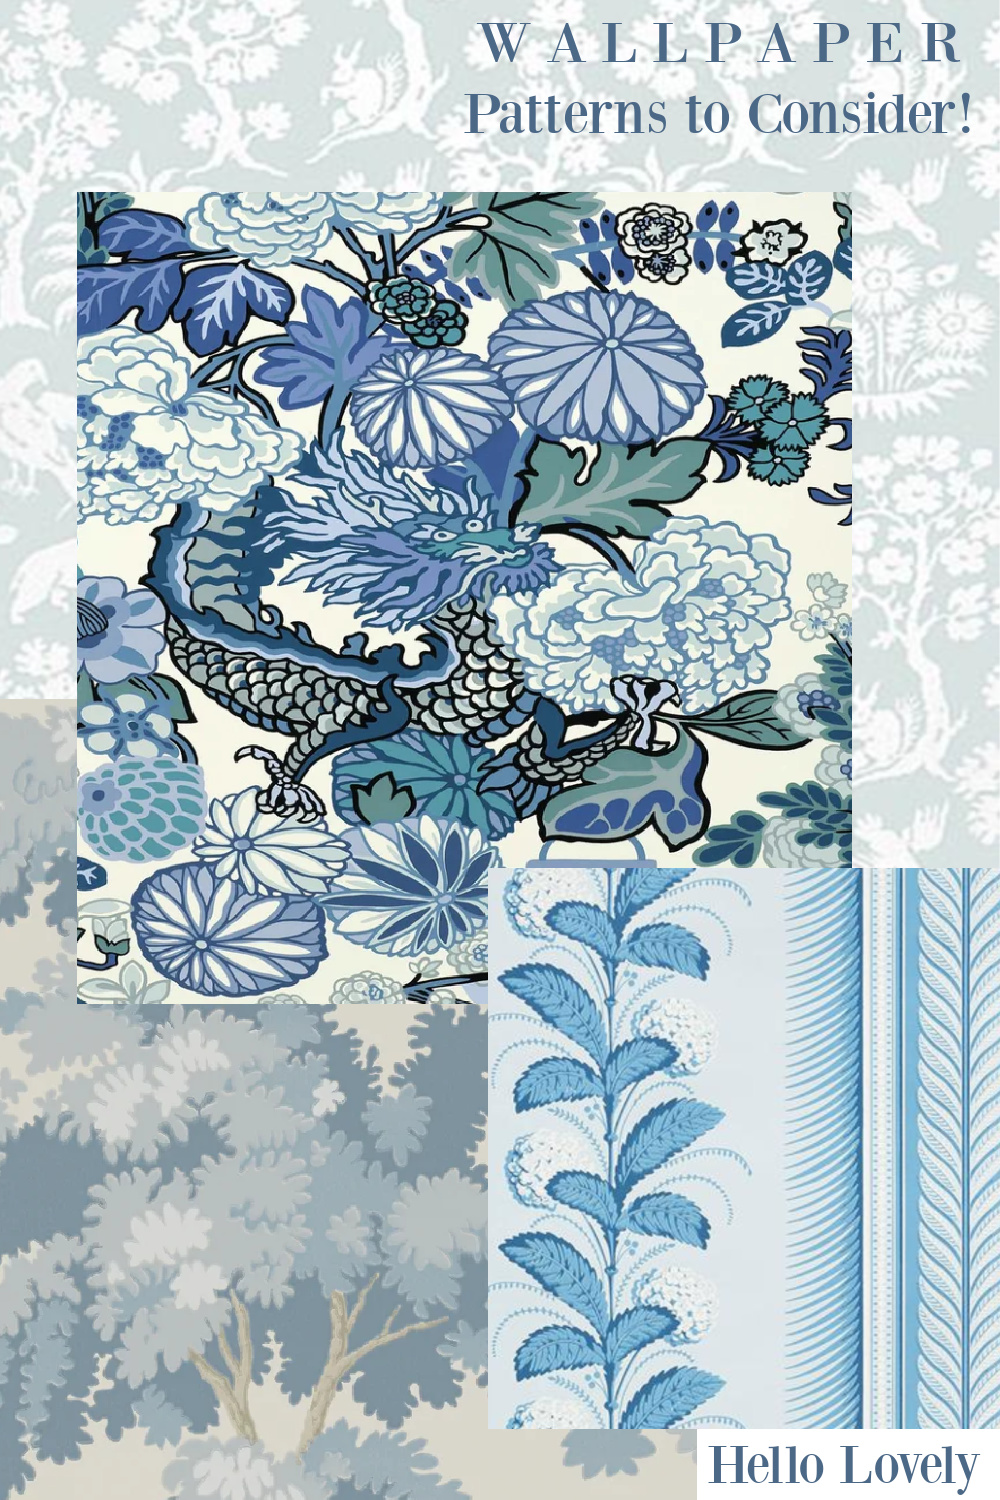 Beautiful wallpaper patterns to consider - Hello Lovely Studio. #wallpaperpatterns #bluewallpaper #floralwallpaper